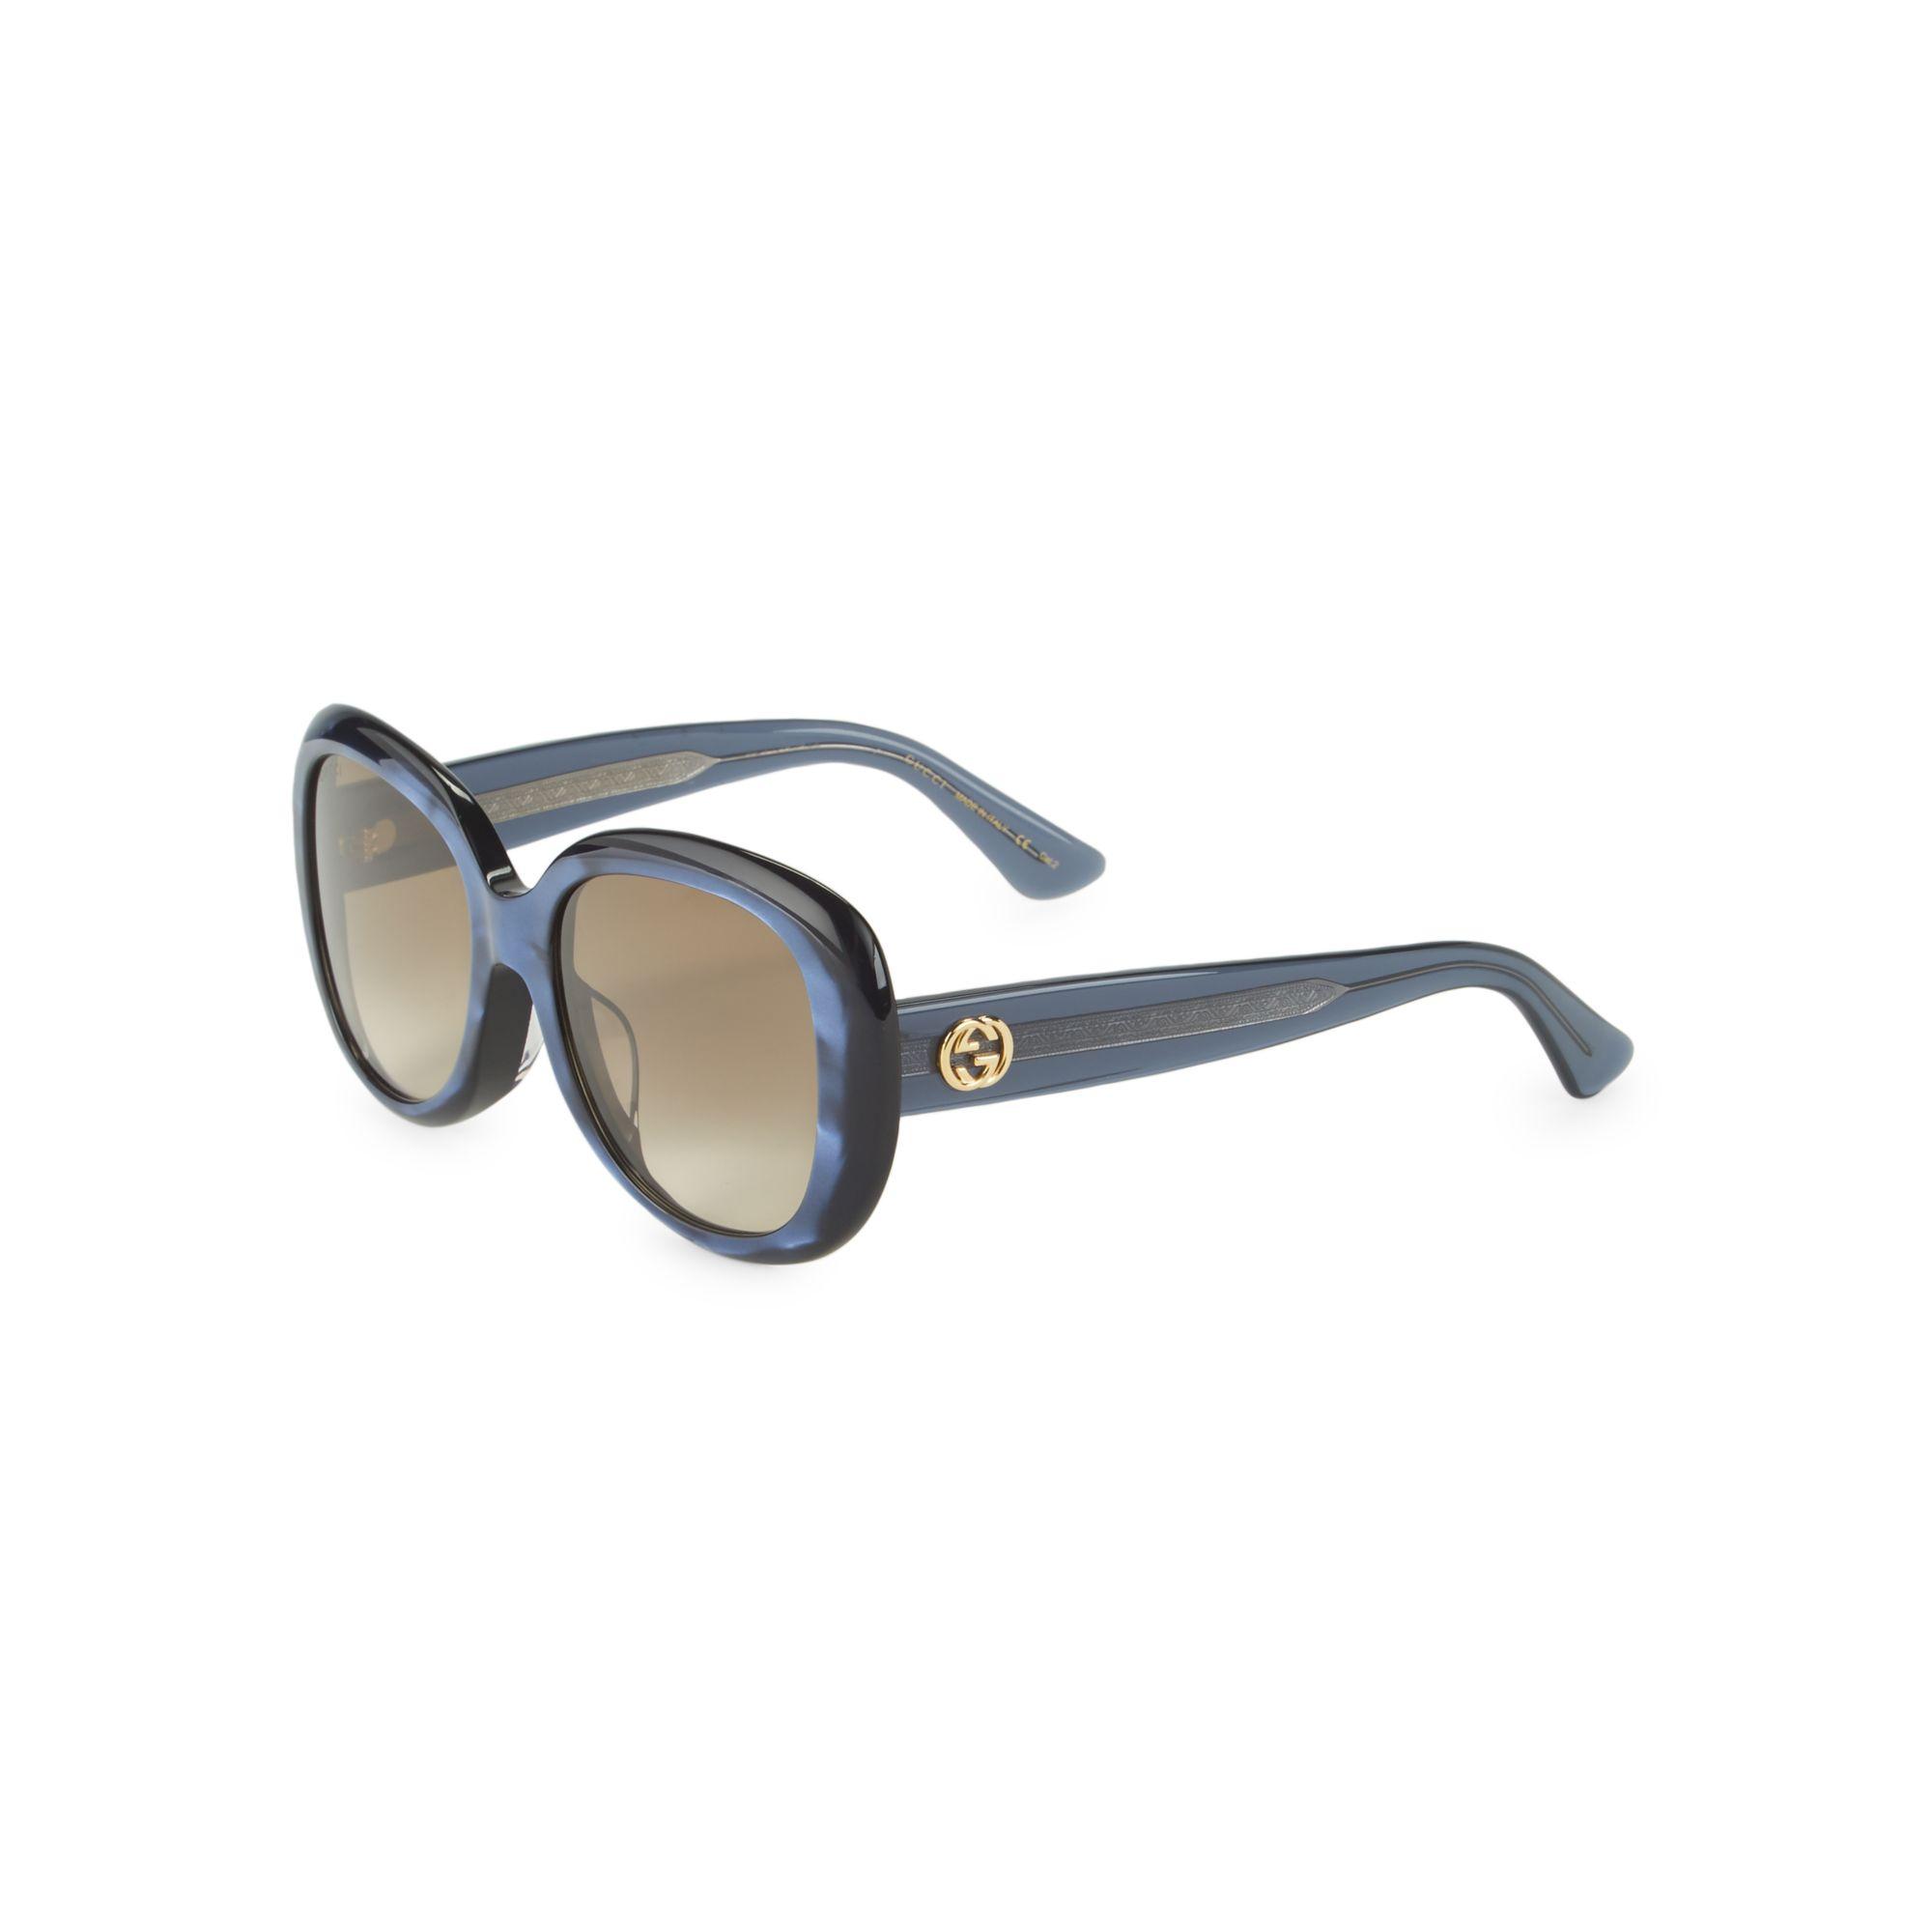 Gucci 55mm Oversized Square Sunglasses in Blue - Lyst